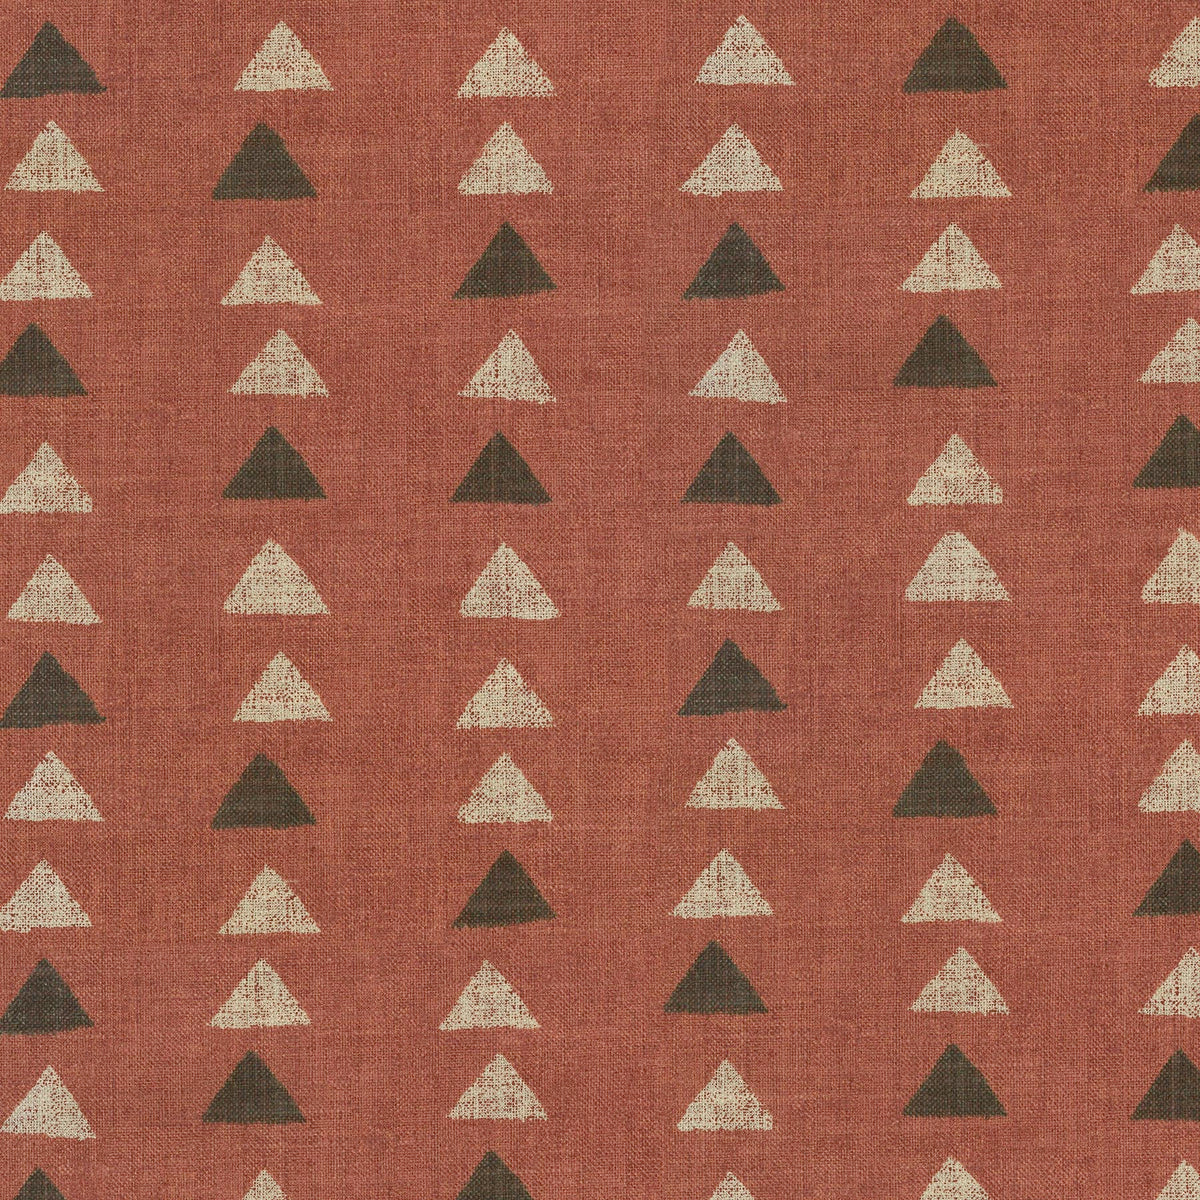 P/K Lifestyles Nomadic Triangle - Pomegranate 408456 Fabric Swatch